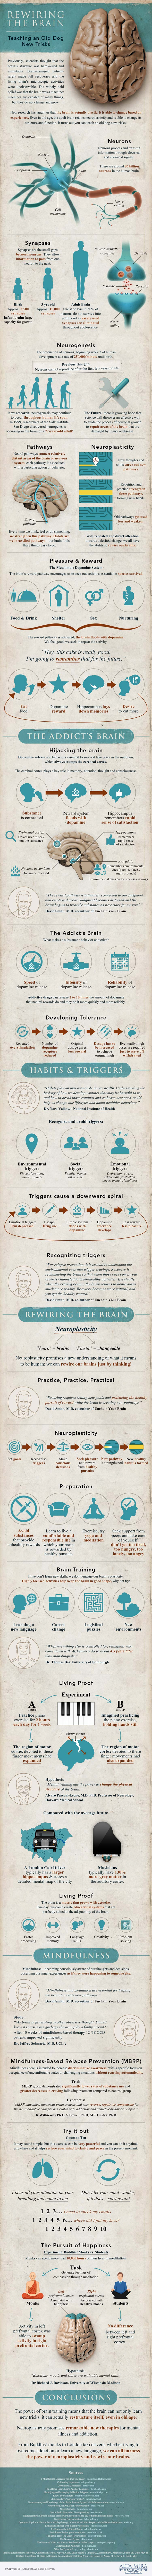 Rewiring The Brain